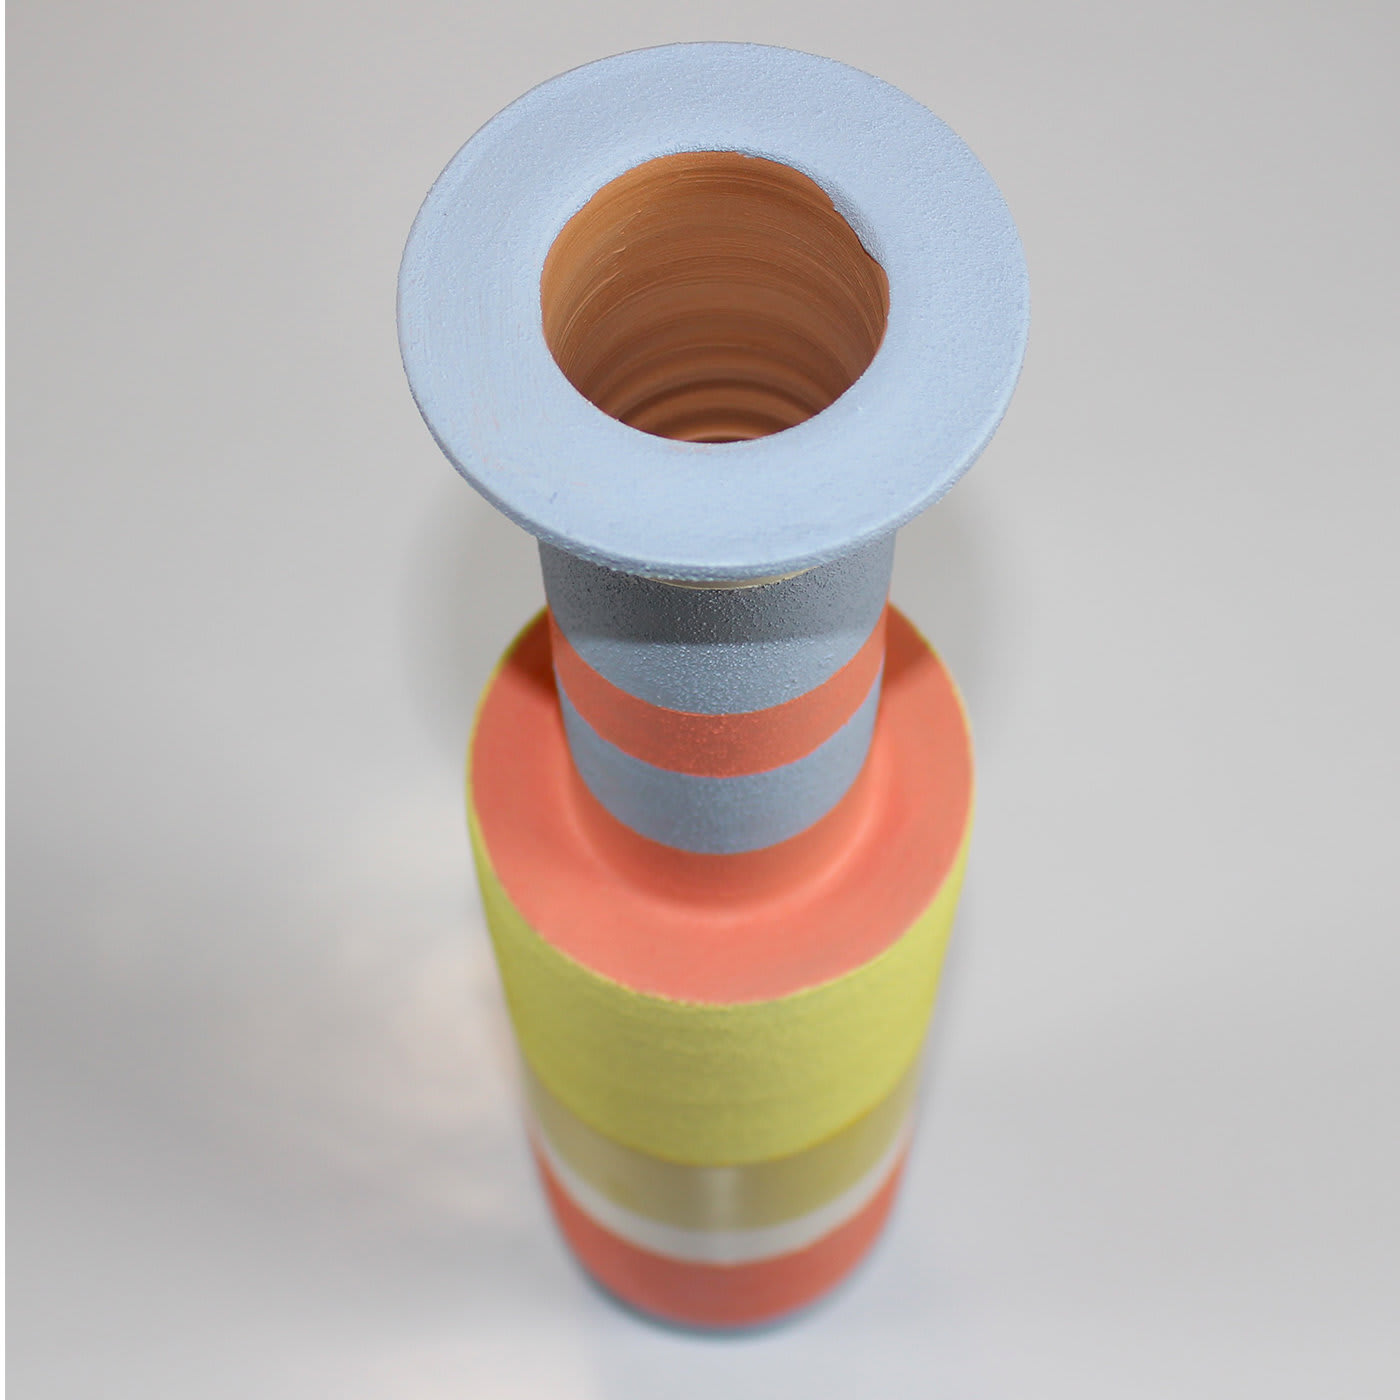 Terracotta #2 Vase by Mascia Meccani - Meccani Design